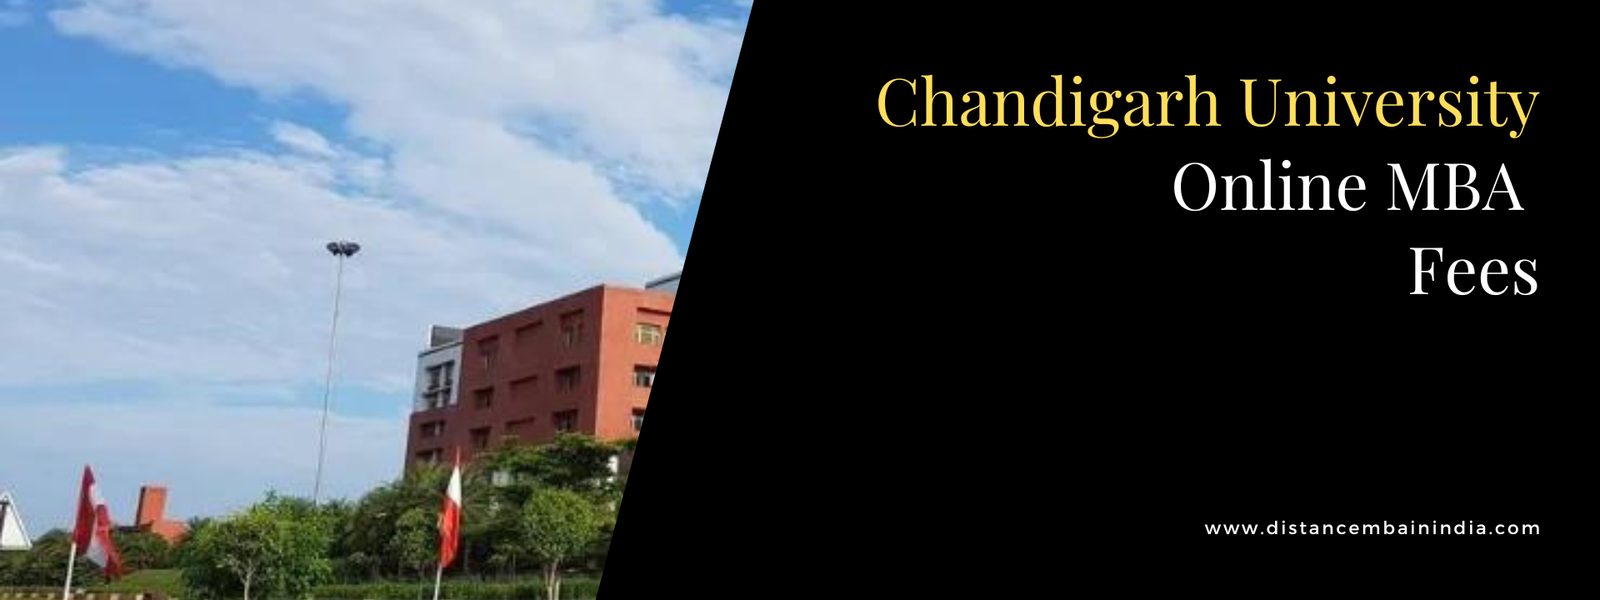 Chandigarh University Online MBA Fees